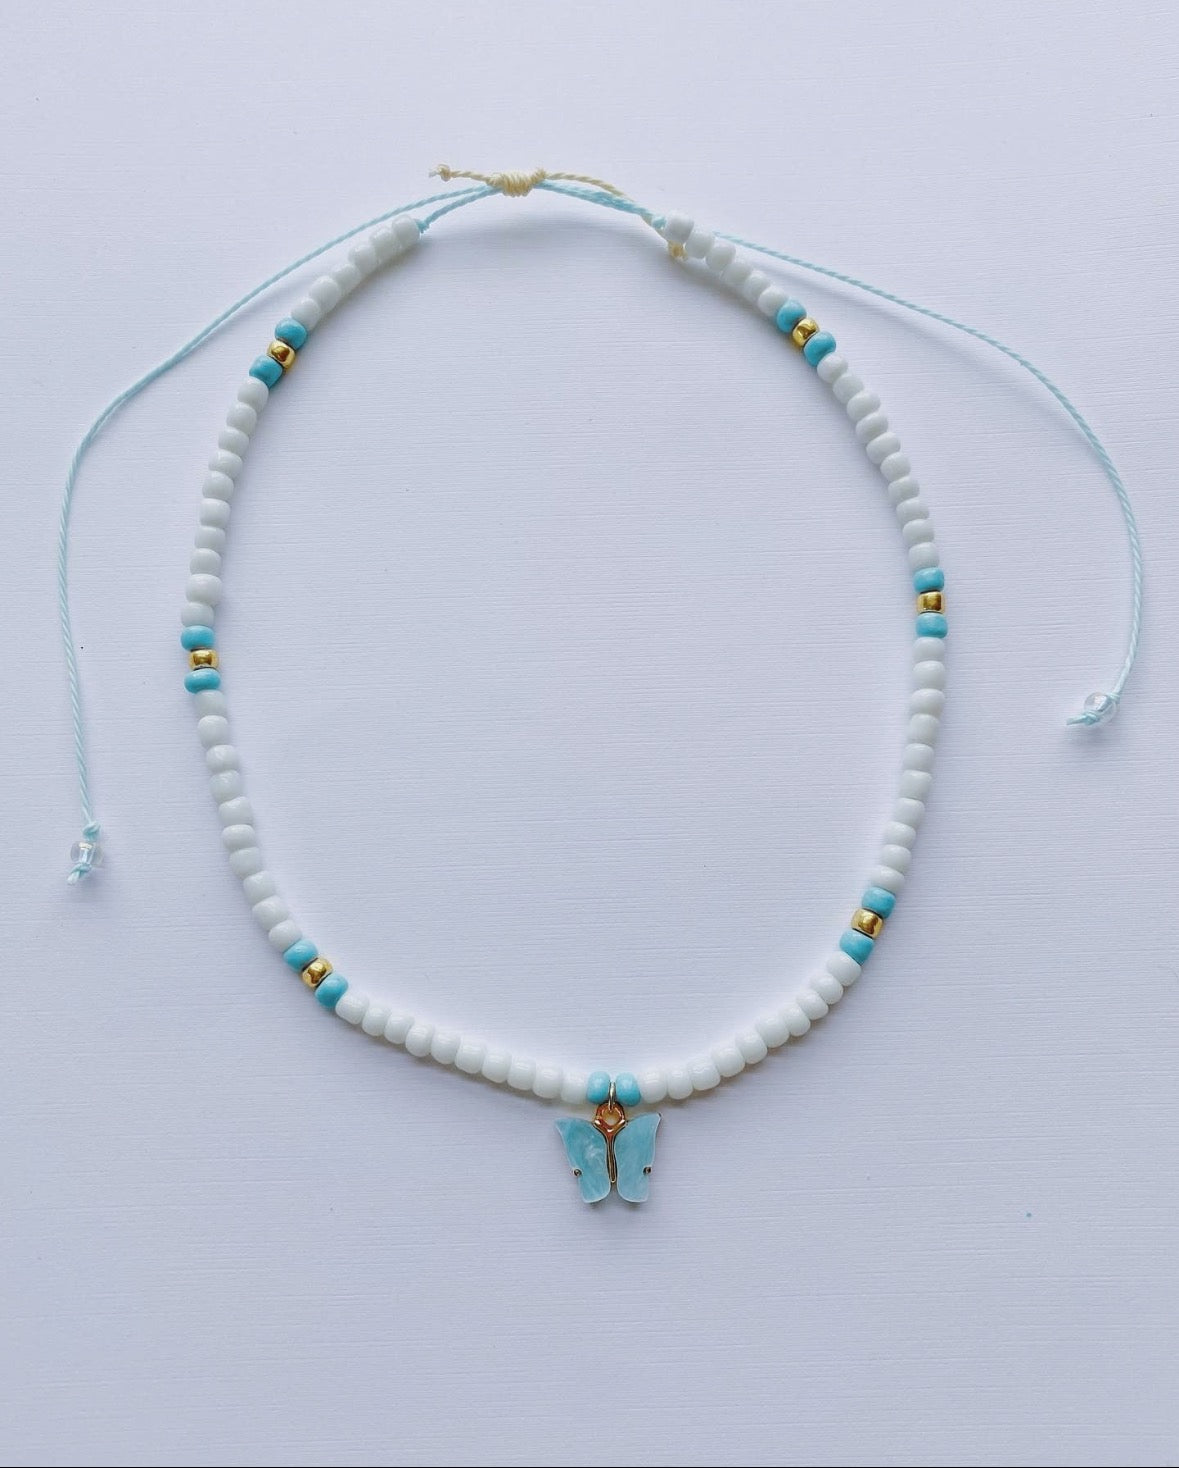 Butterfly beaded choker necklace